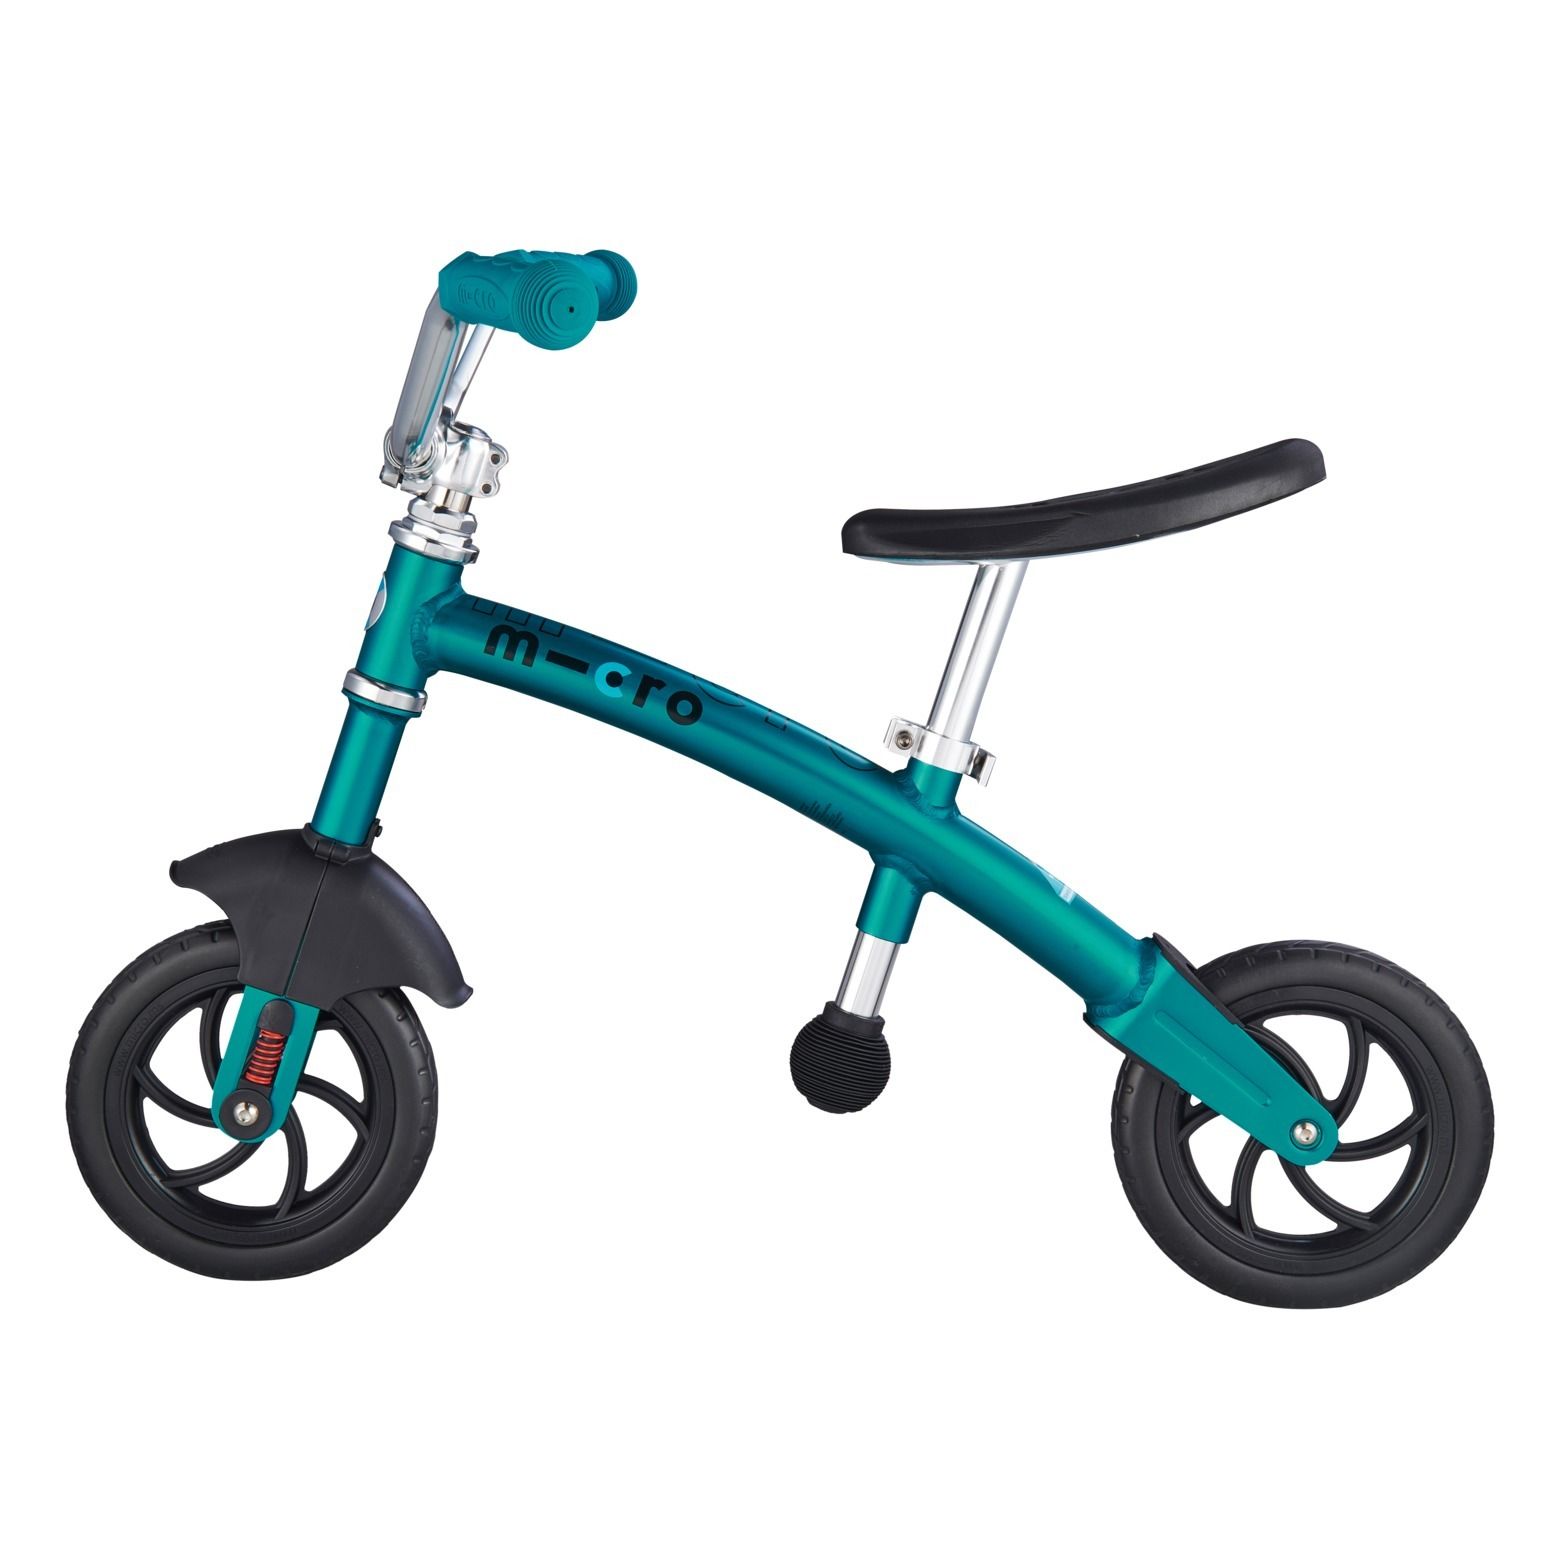 G bike. Беговел Micro g-Bike Chopper. Micro 2.0 беговел. Micro 3 in 1 беговел. Micro велосипед детский.